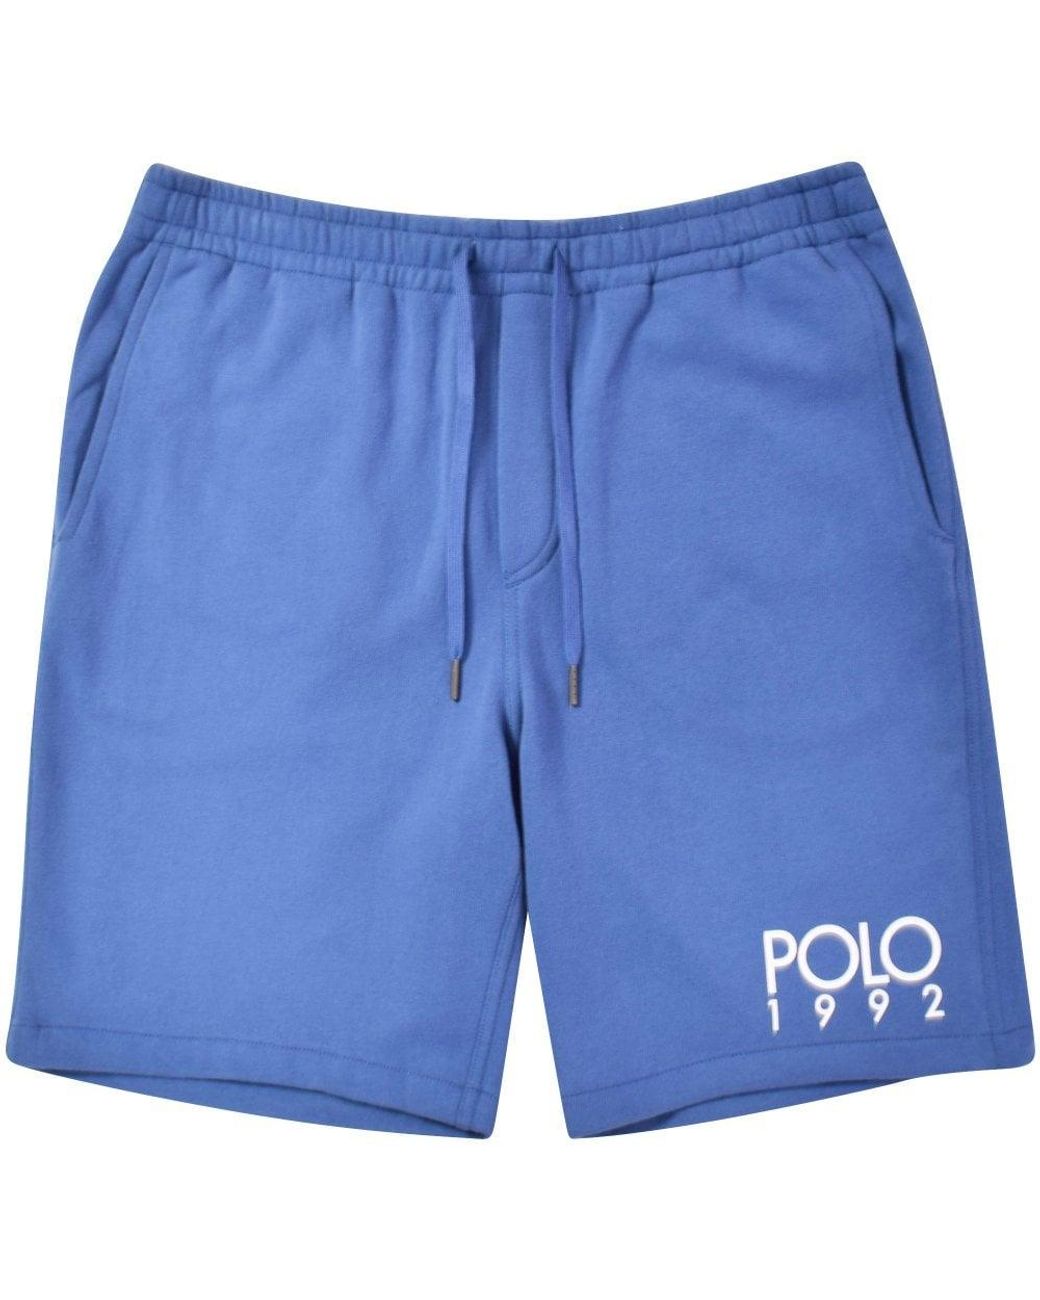 Polo Ralph Lauren Cotton 1992 Shorts in Blue for Men | Lyst